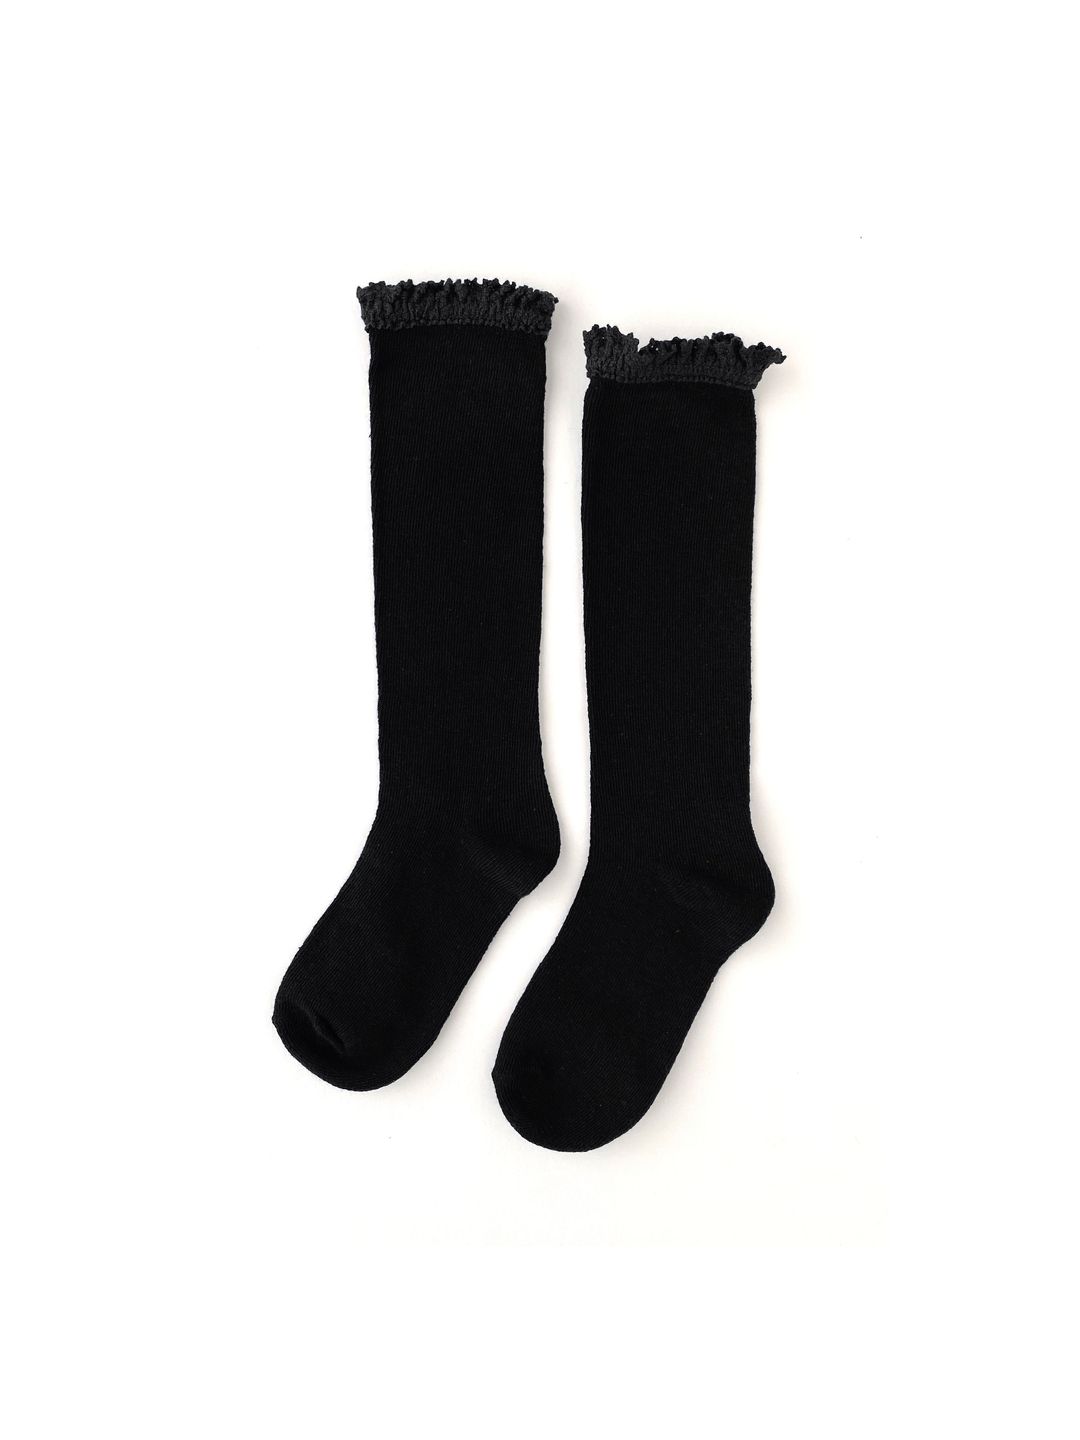 Black Lace Top Knee High Socks